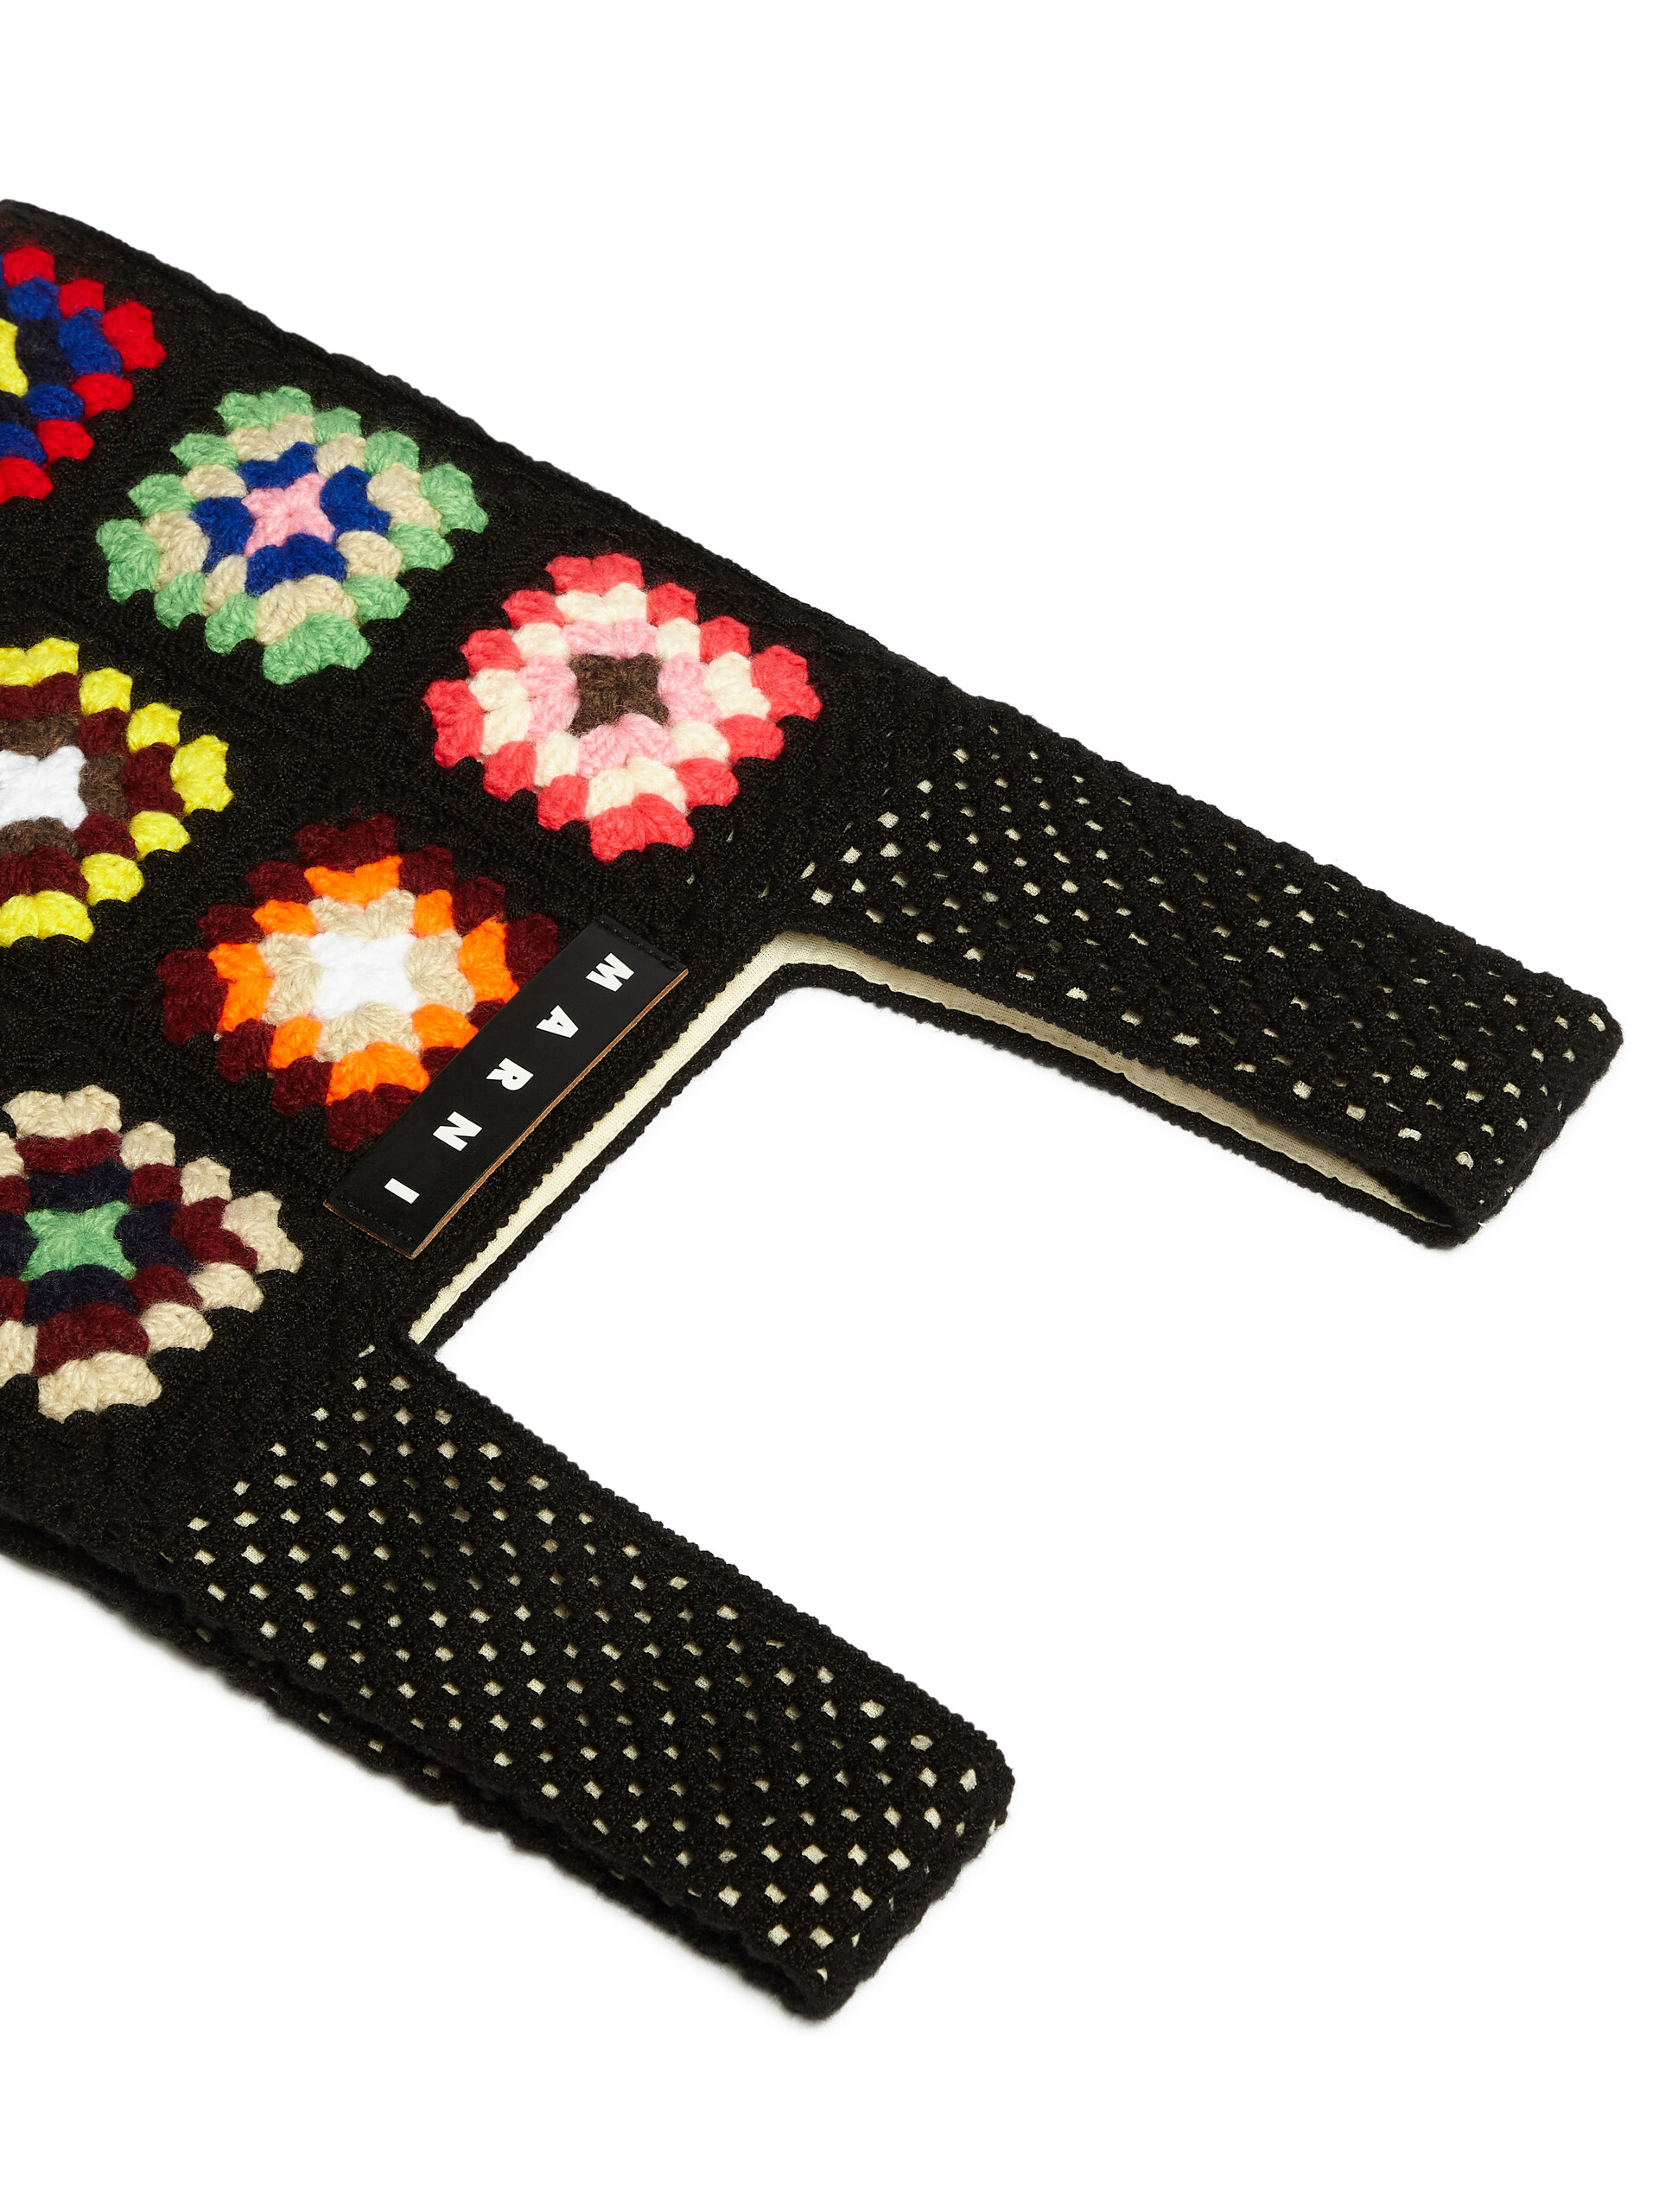 Black crochet polyester MARNI MARKET bag - Bags - Image 4